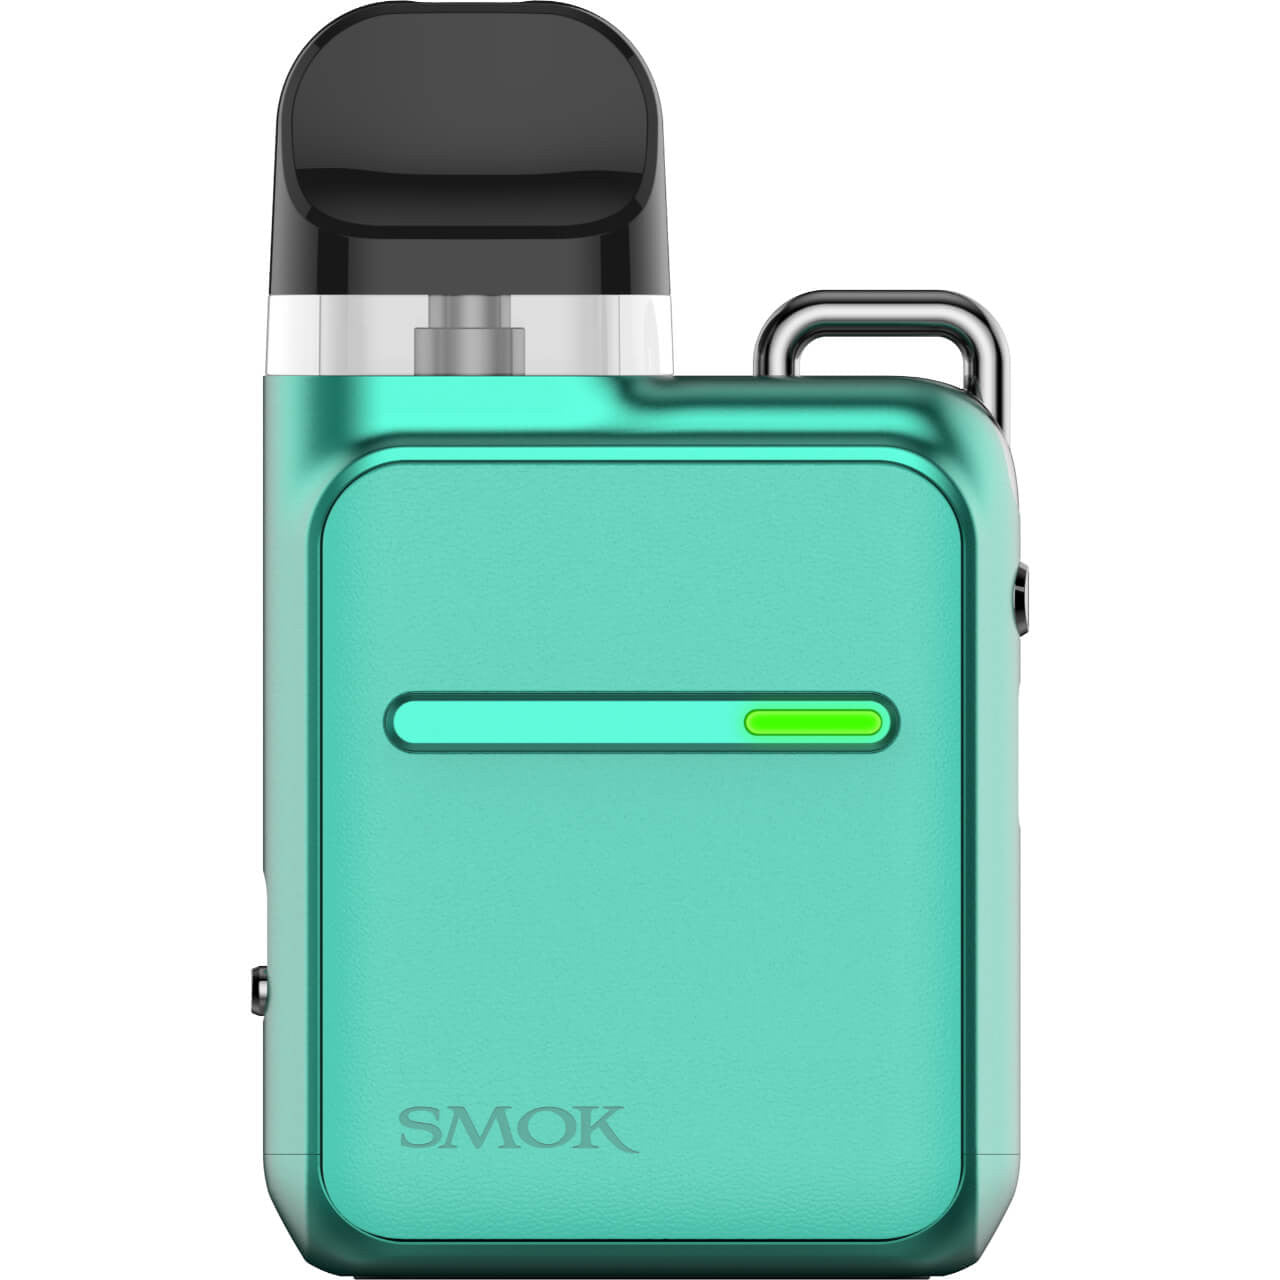 Customer Favorite Smoktech Novo Master Box Kit | High Quality Build